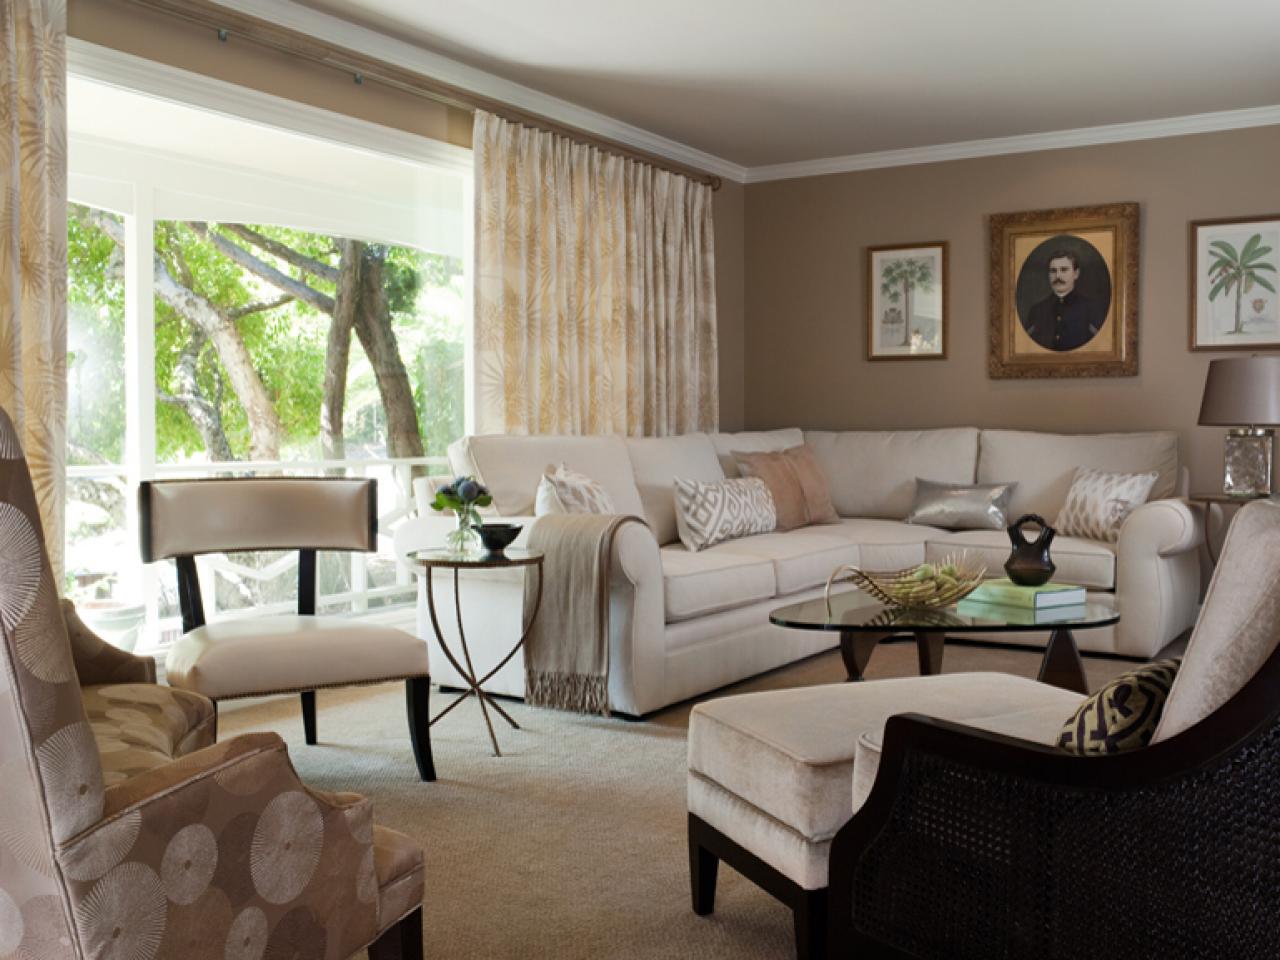 remodeling a living room for resale | hgtv